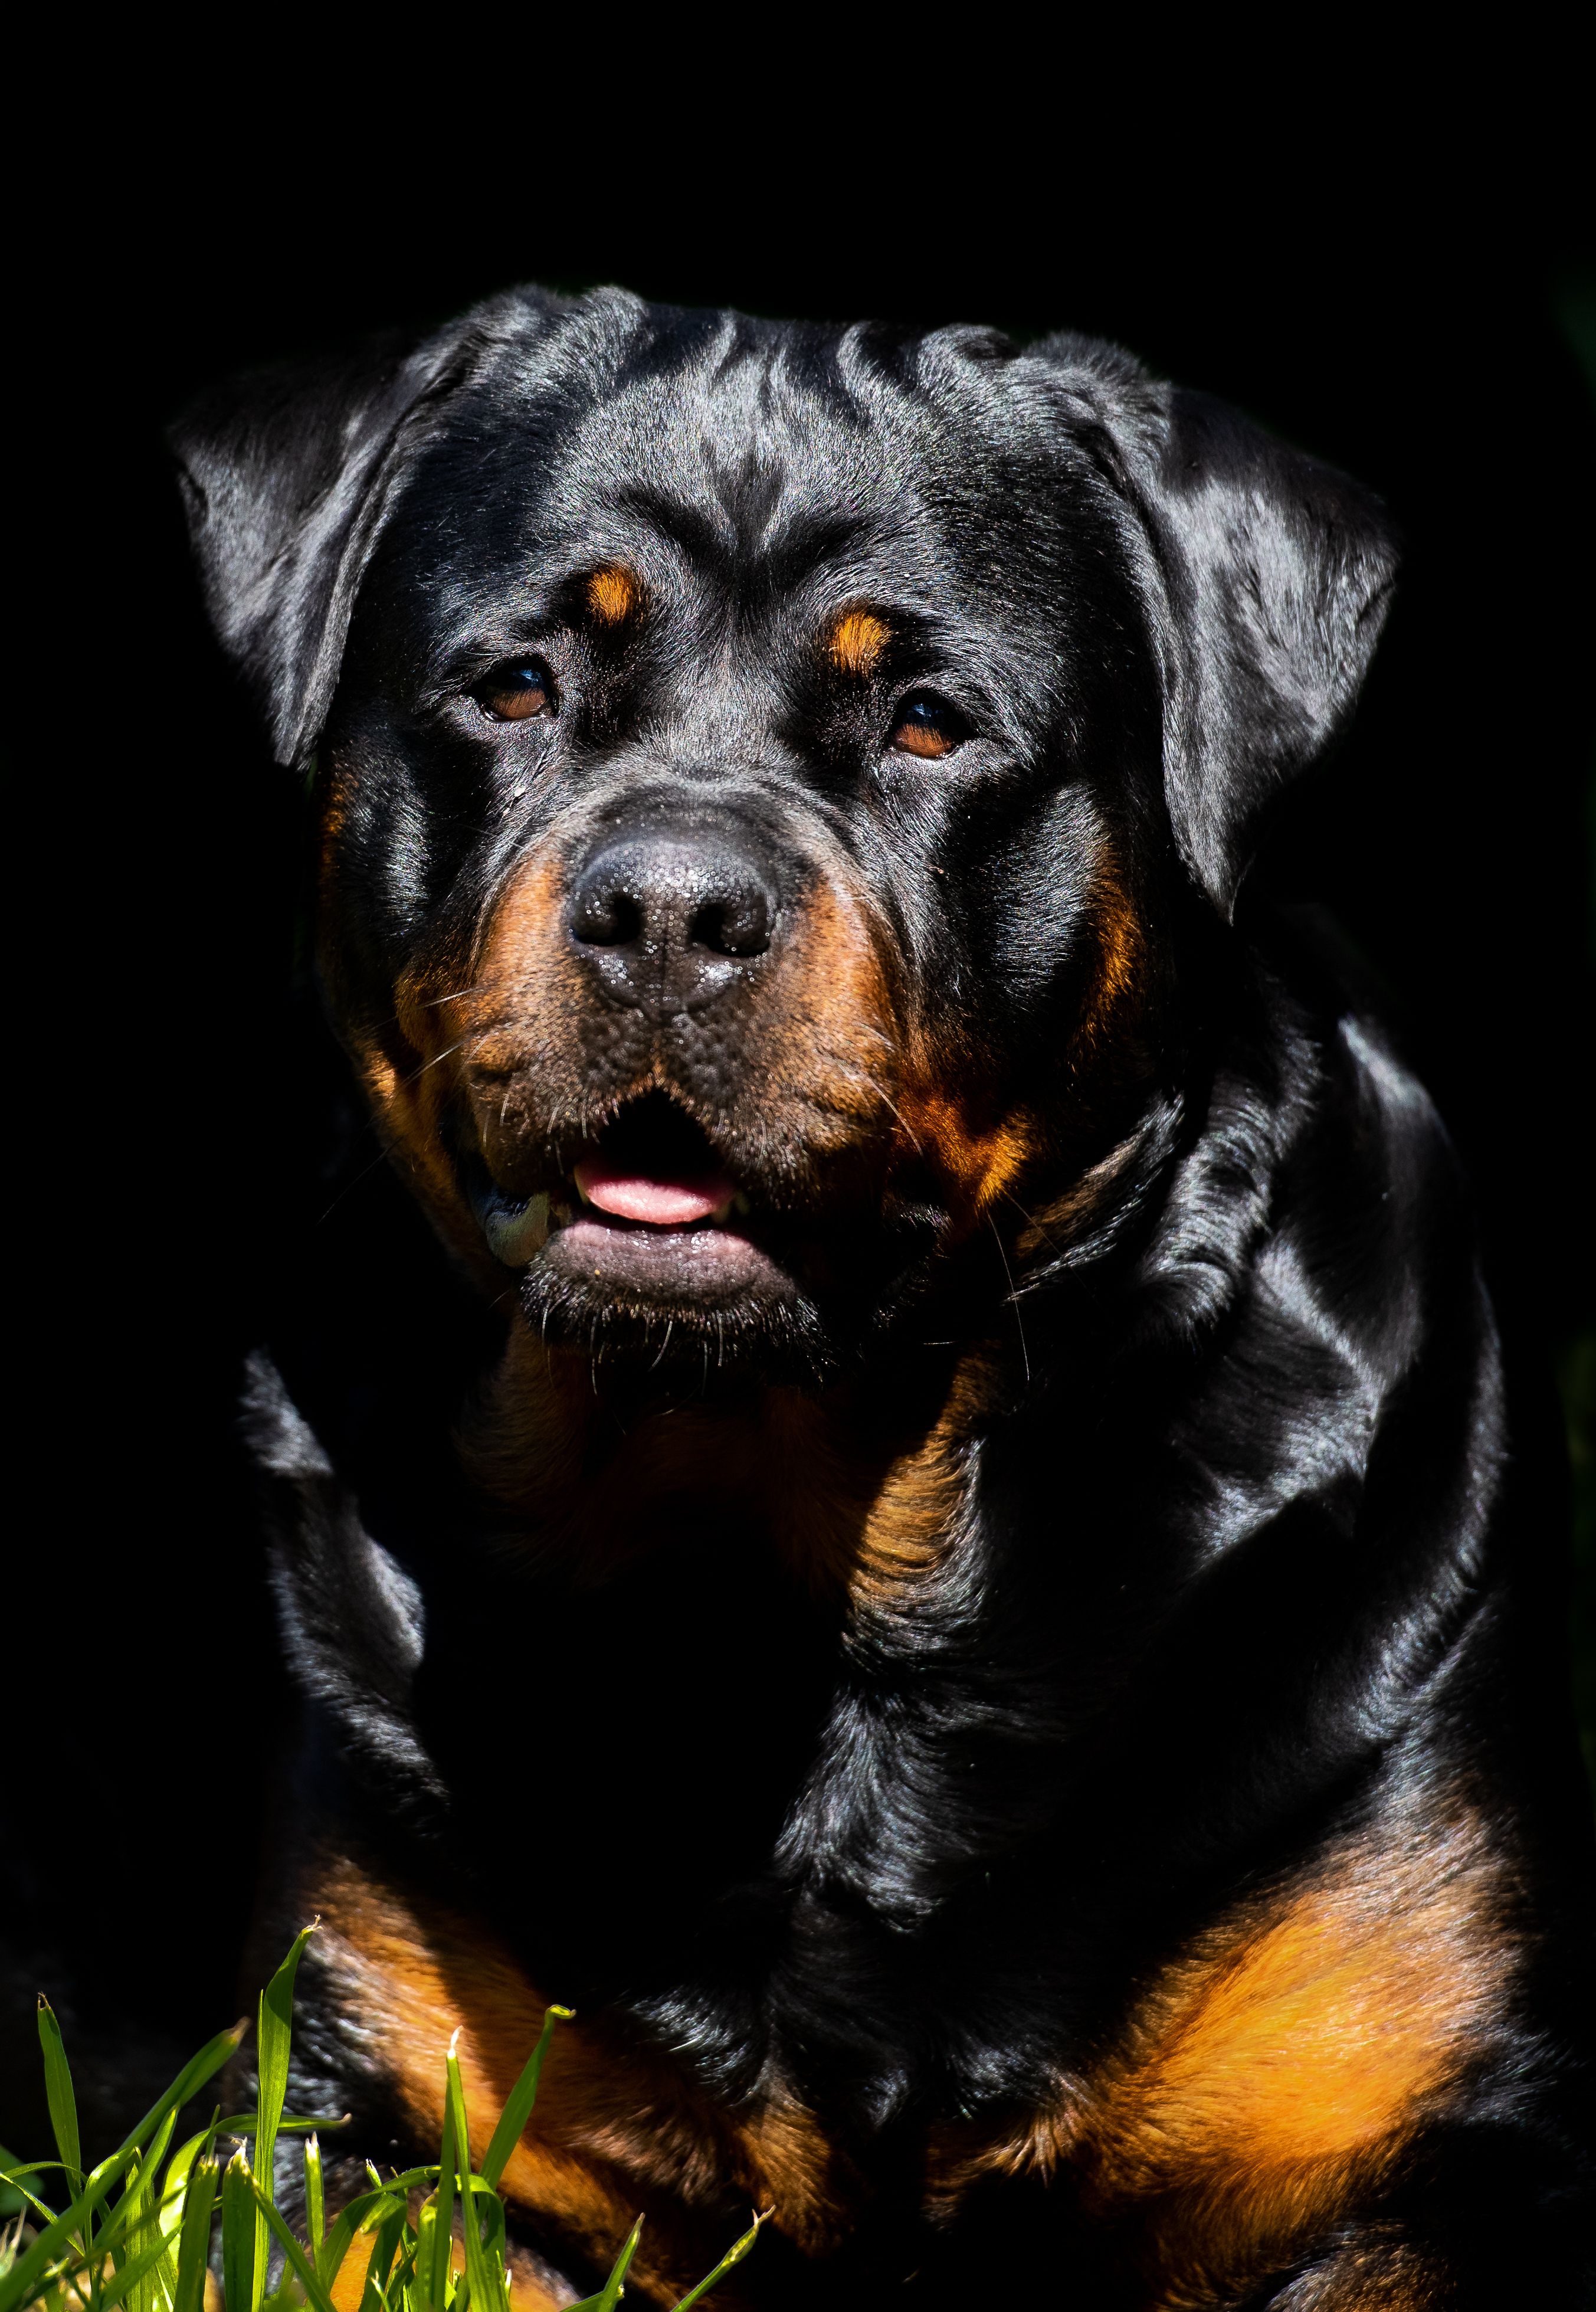 https://hips.hearstapps.com/hmg-prod/images/close-up-portrait-of-rottweiler-against-black-royalty-free-image-1650397717.jpg